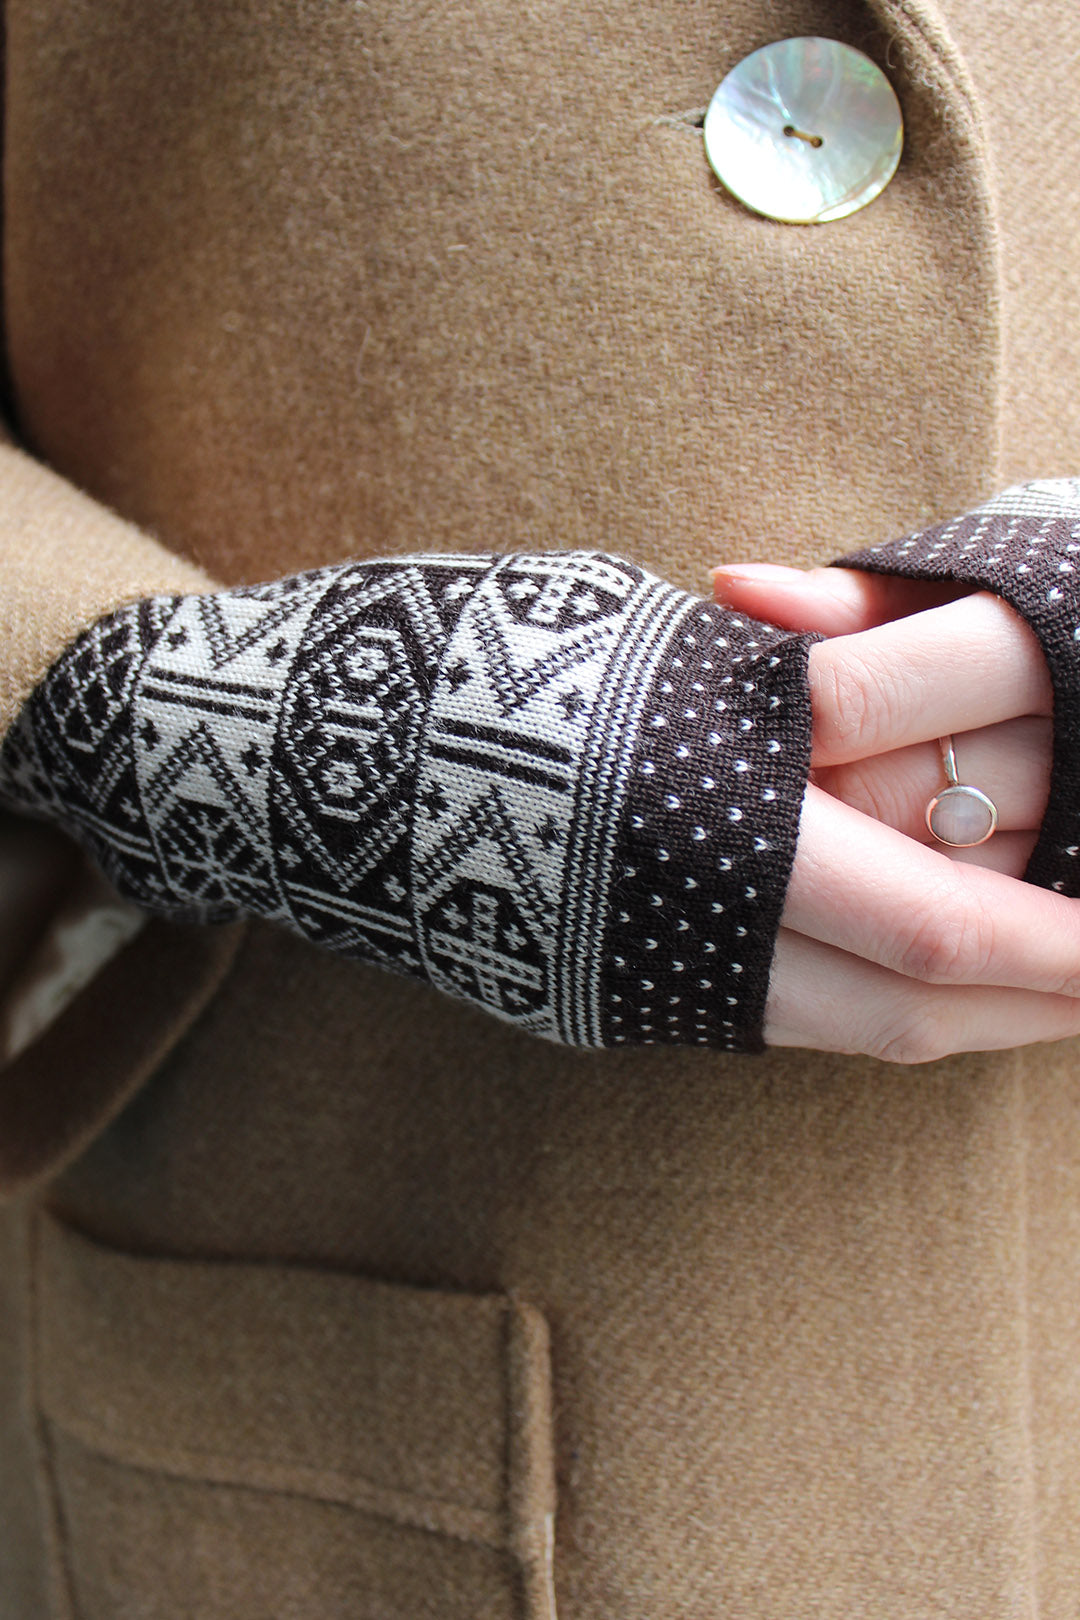 Scottish Shetland Fair Isle designer wrist warmers in black and white, based on traditional geometric Shetland designs. This beautiful pair of Fair Isle wrist warmers is knitted by BAKKA in soft merino wool.